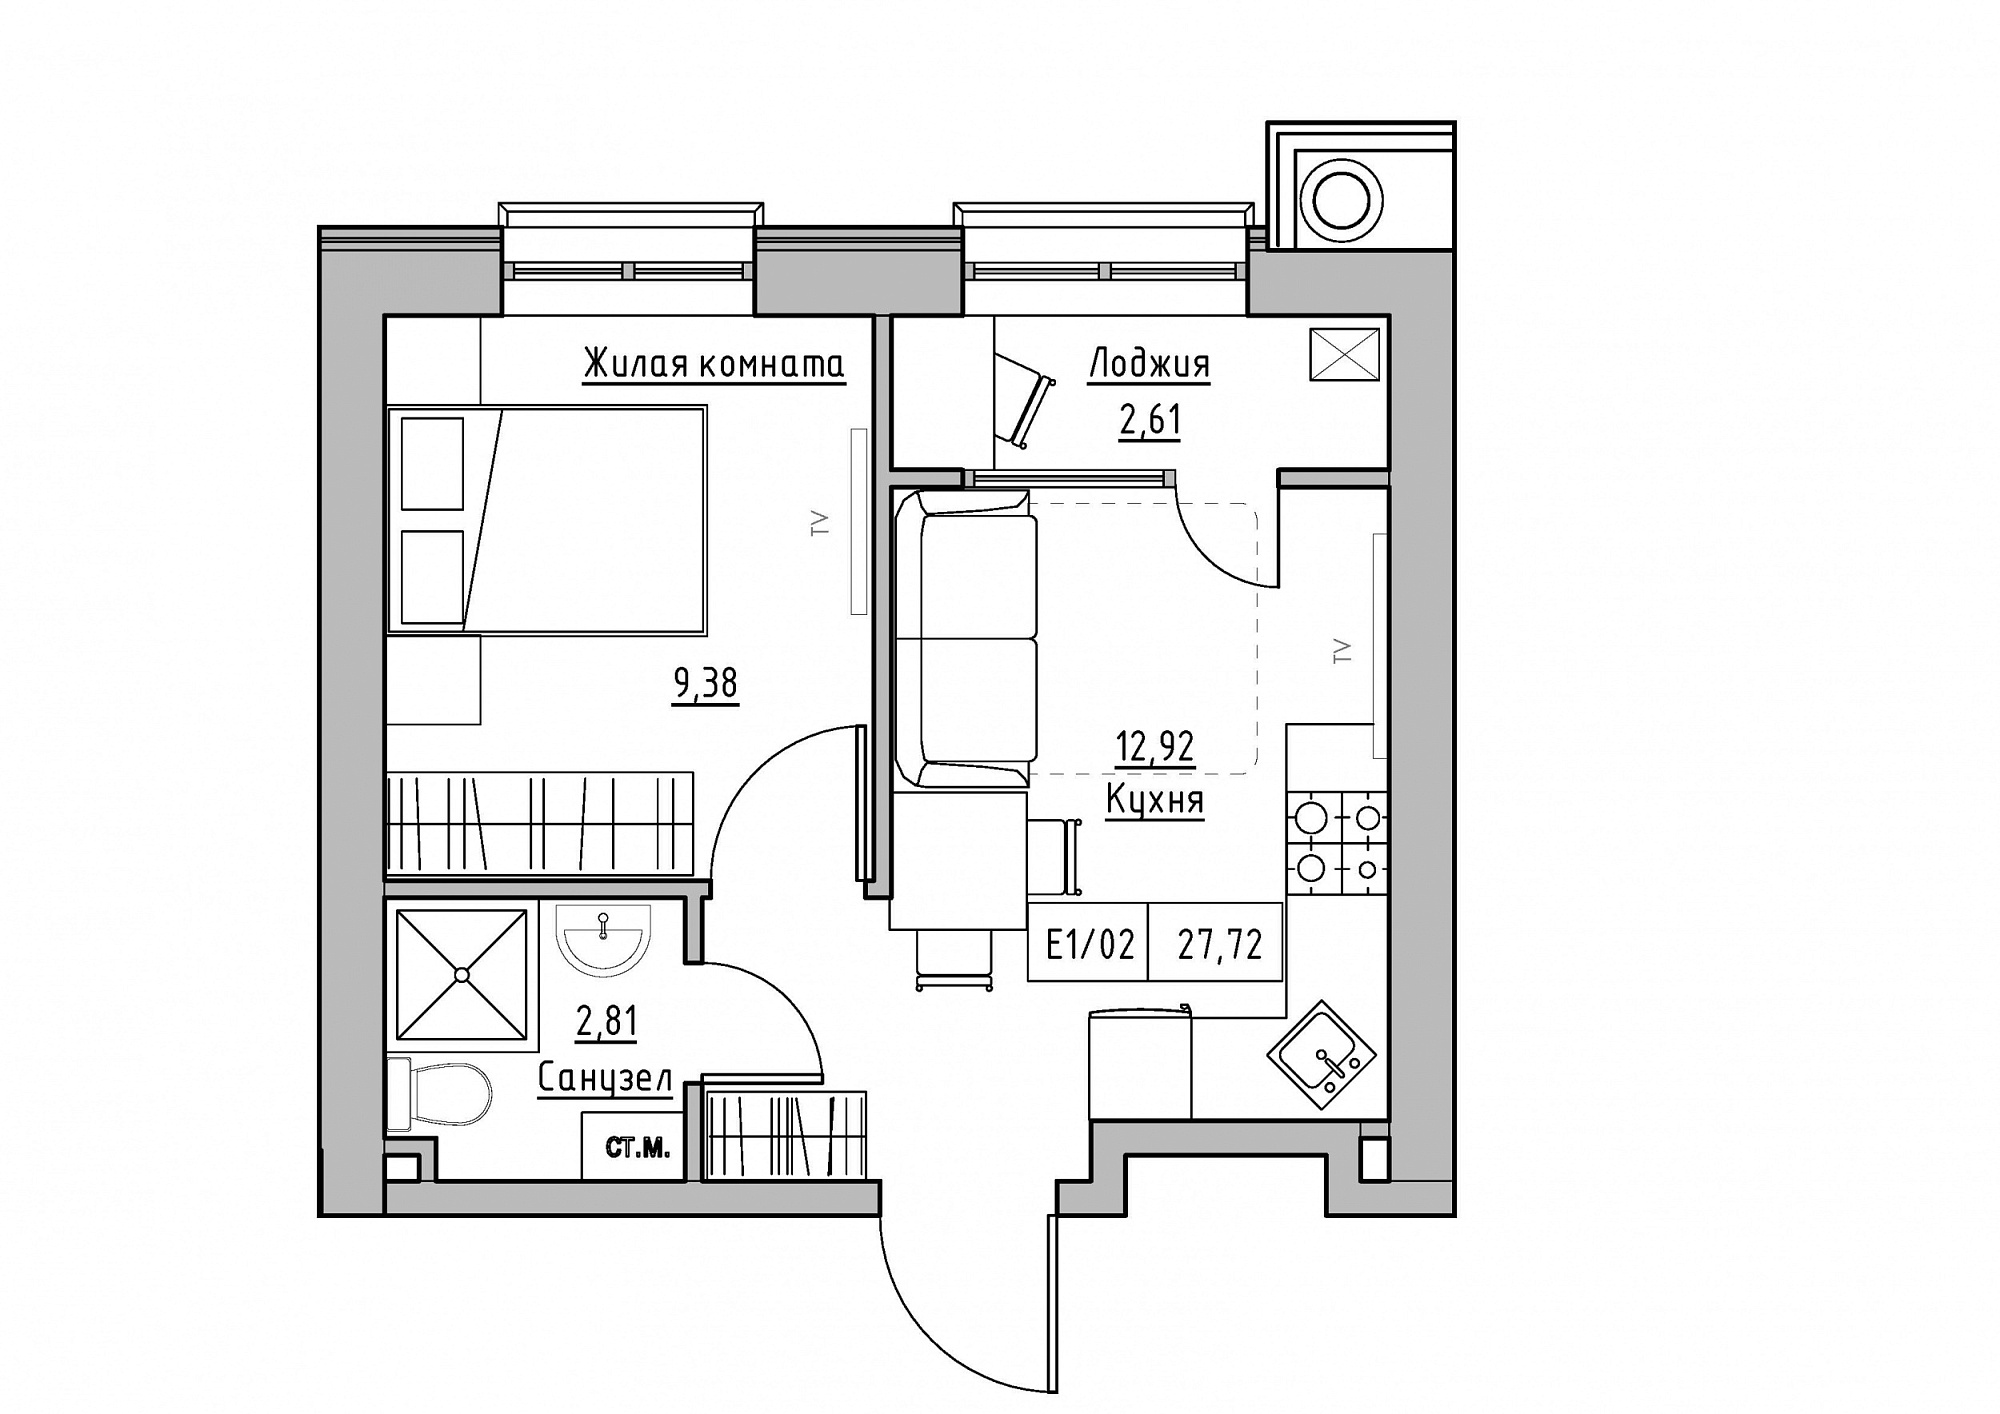 Planning 1-rm flats area 27.72m2, KS-012-04/0001.